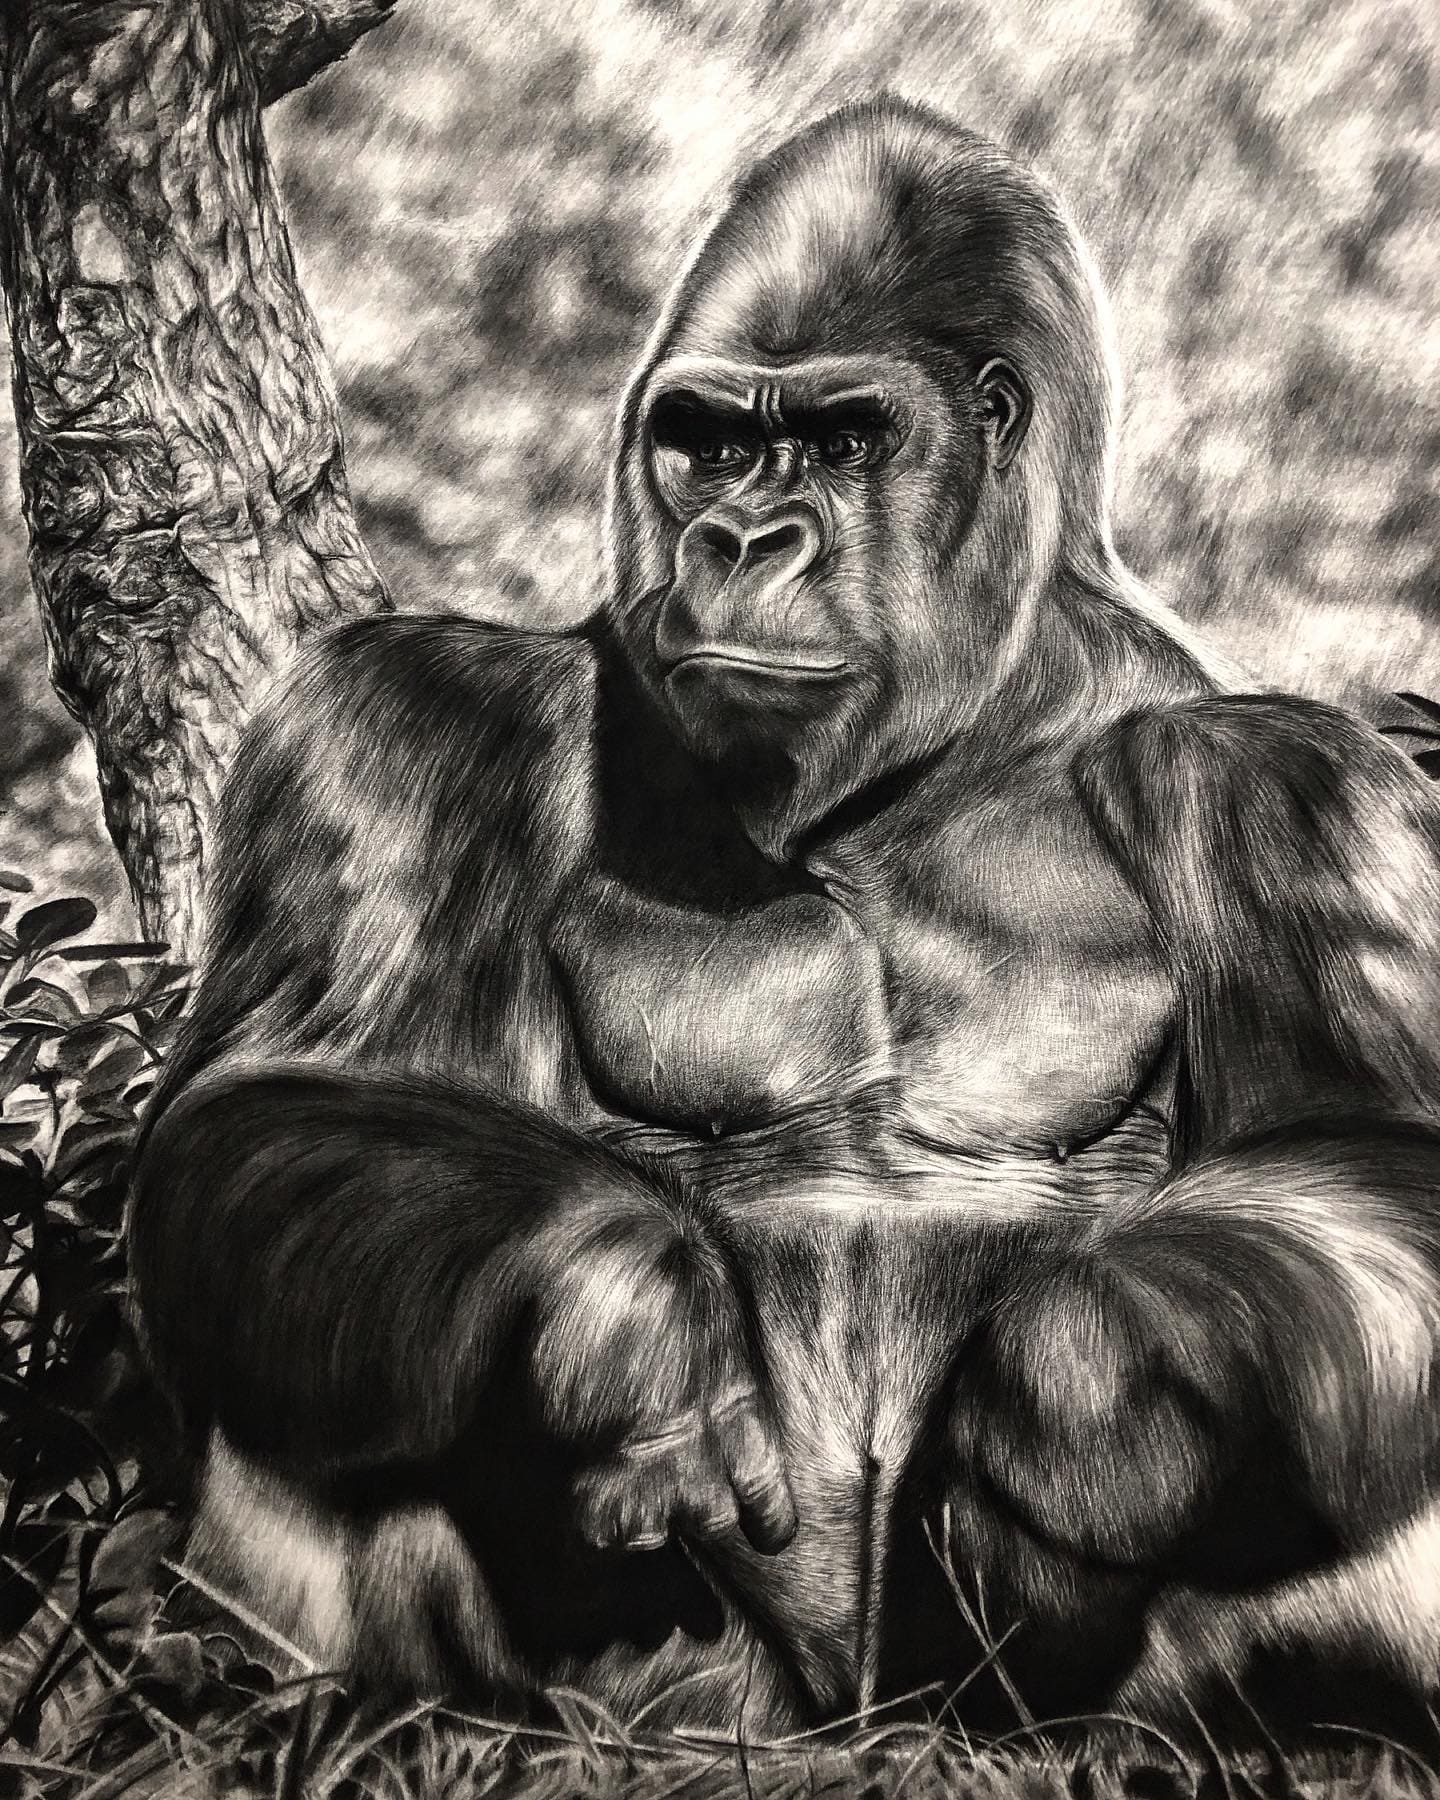 Dessin au fusain de gorille par l'artiste peintre animalier chris rossi art dessin animalier art